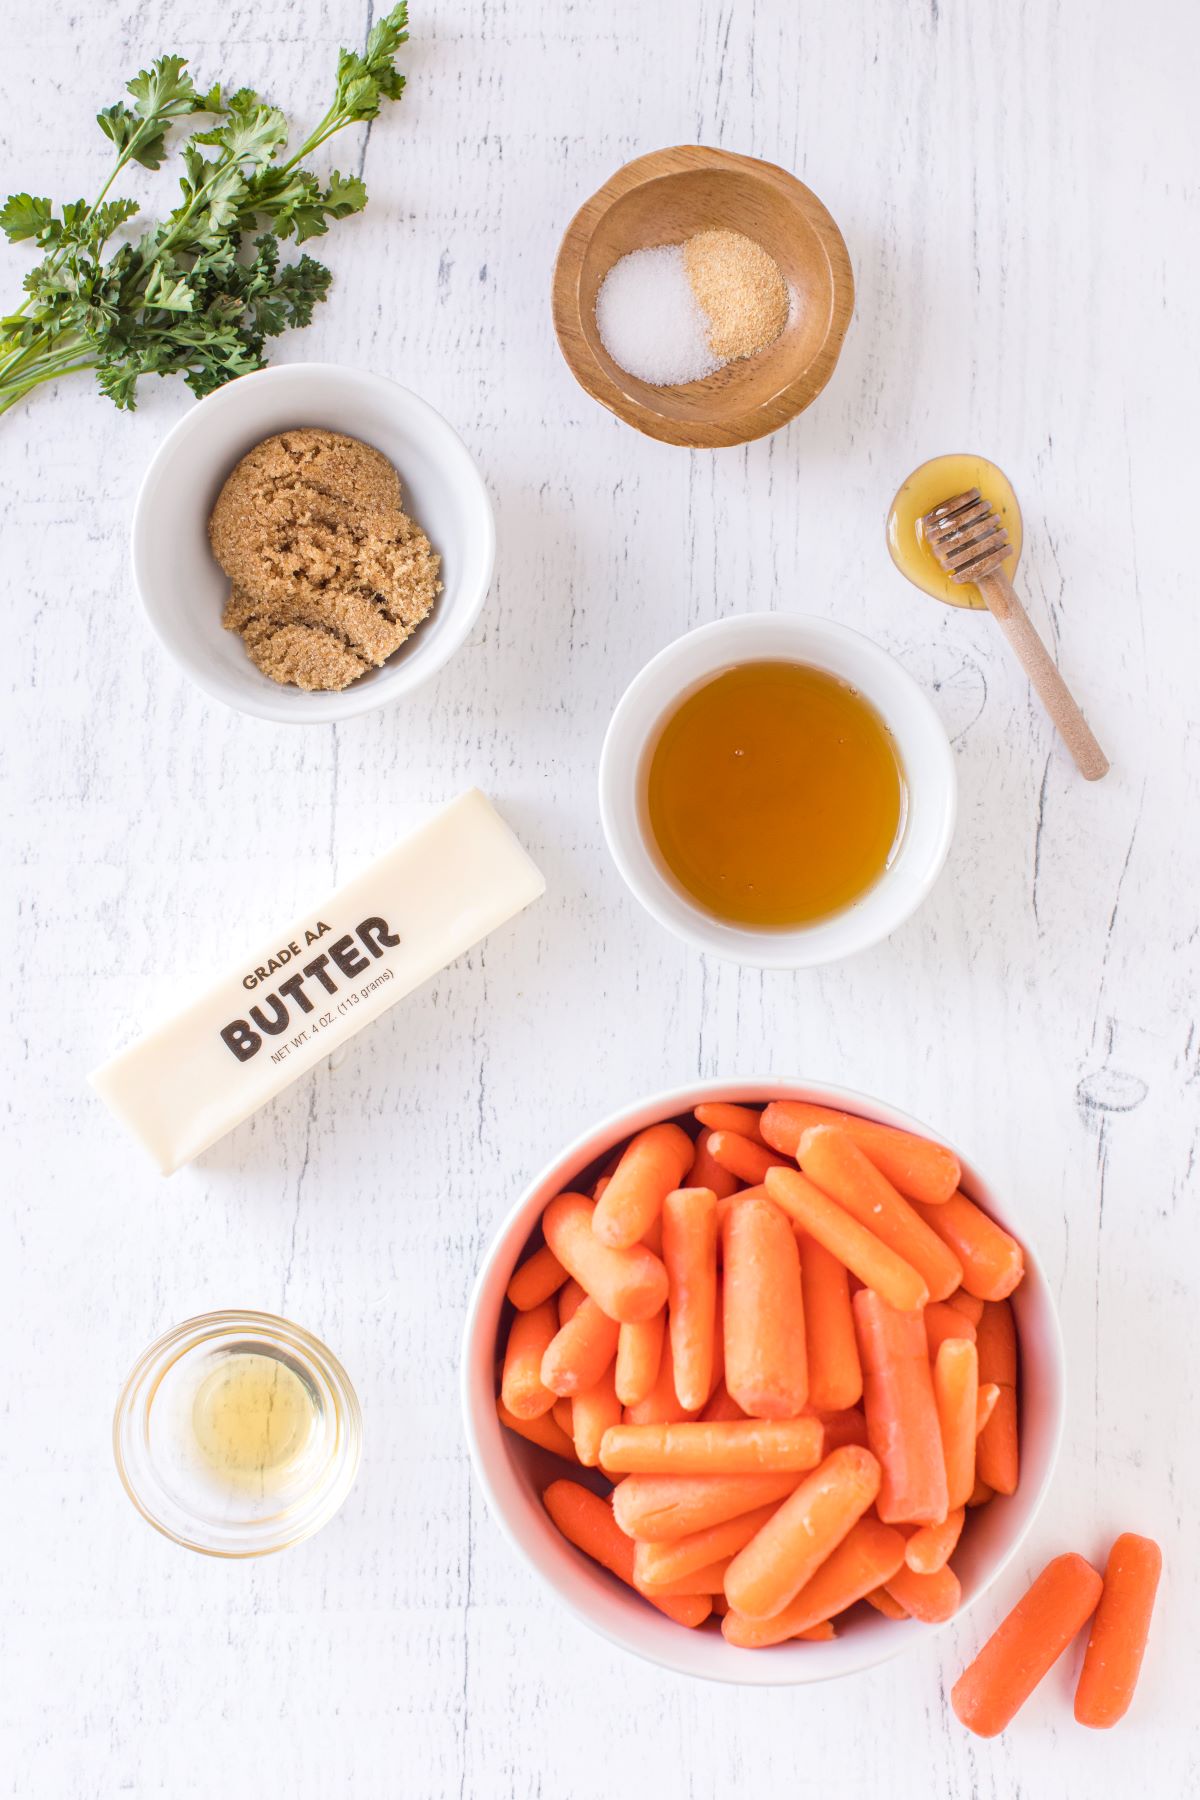 Ingredients to make honey glazed carrots